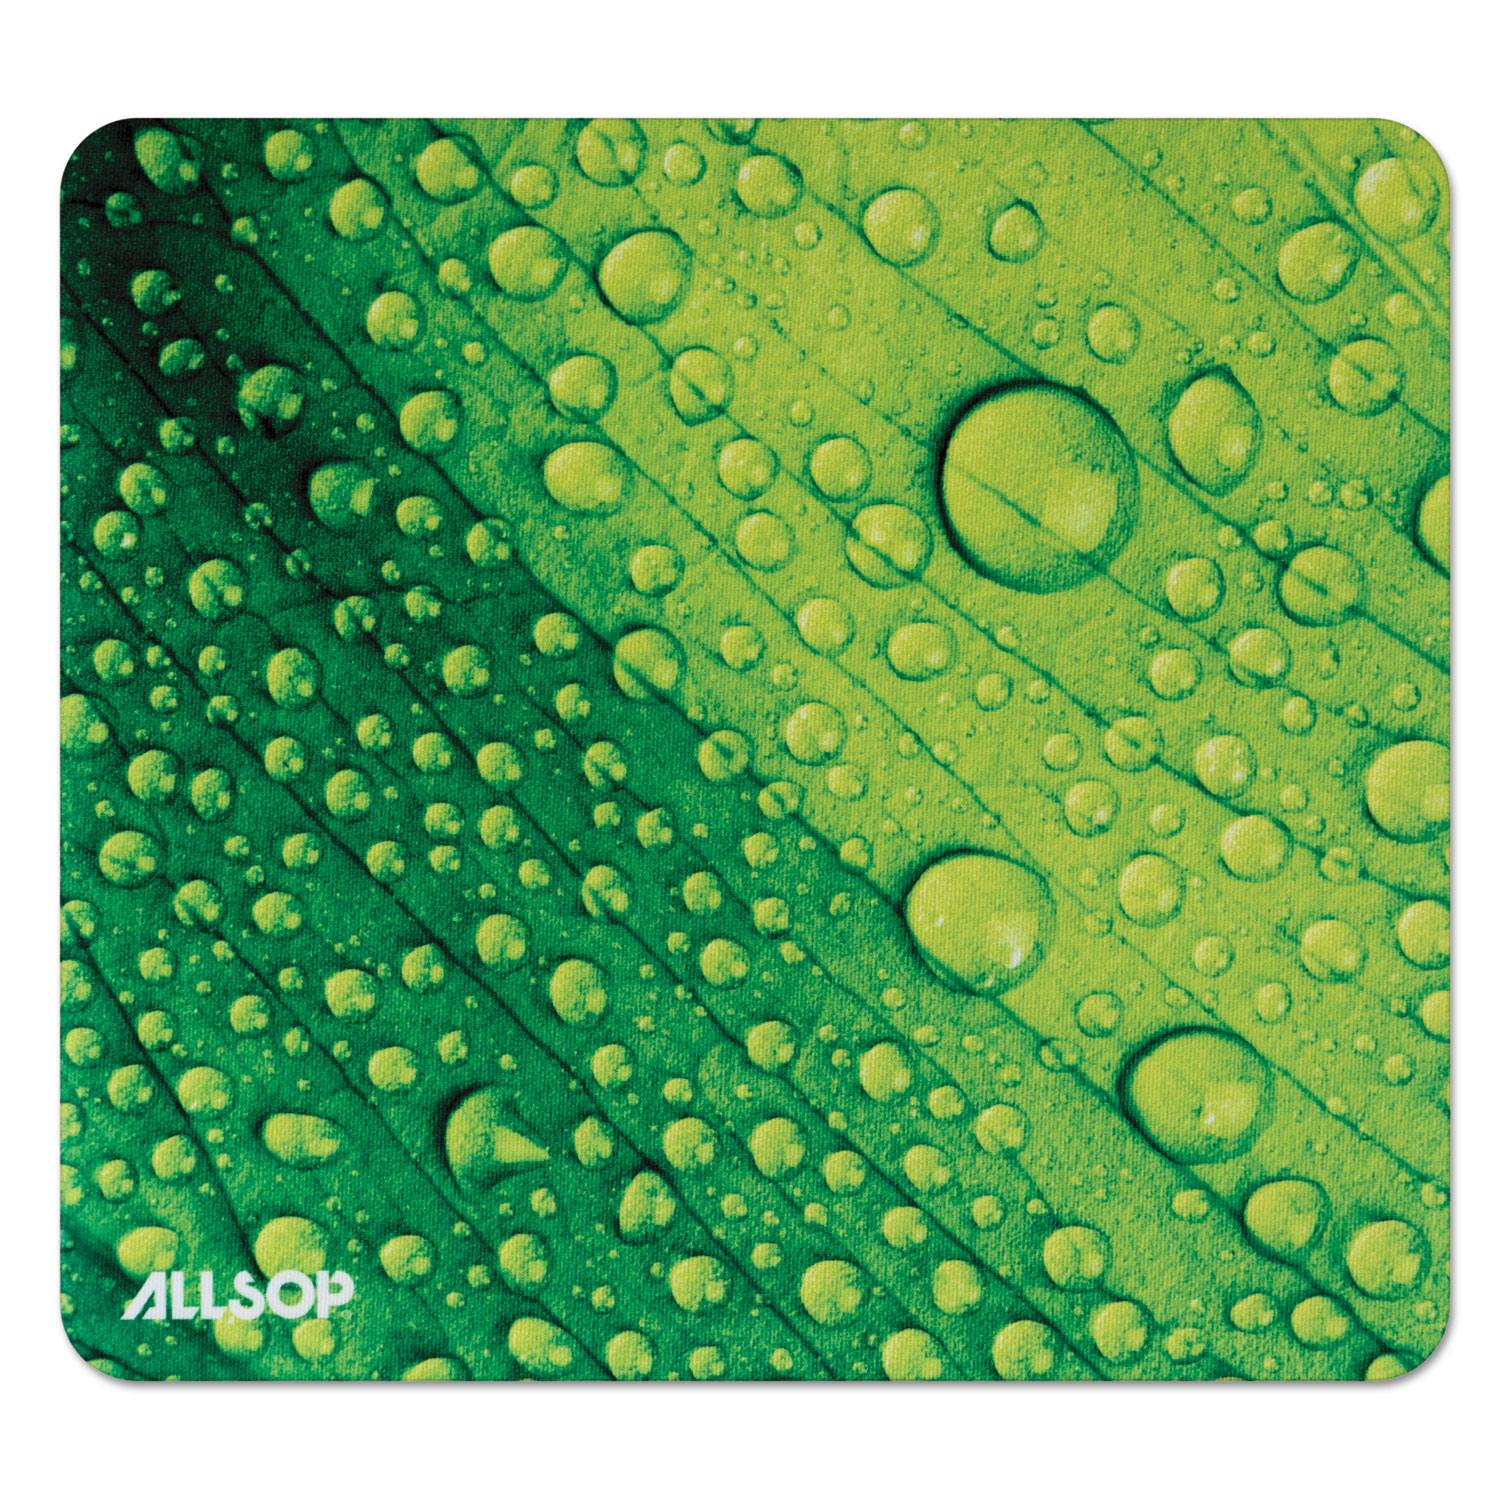  Allsop 31624 Naturesmart Mouse Pad, Leaf Raindrop, 8 1/2 x 8 x 1/10 (ASP31624) 